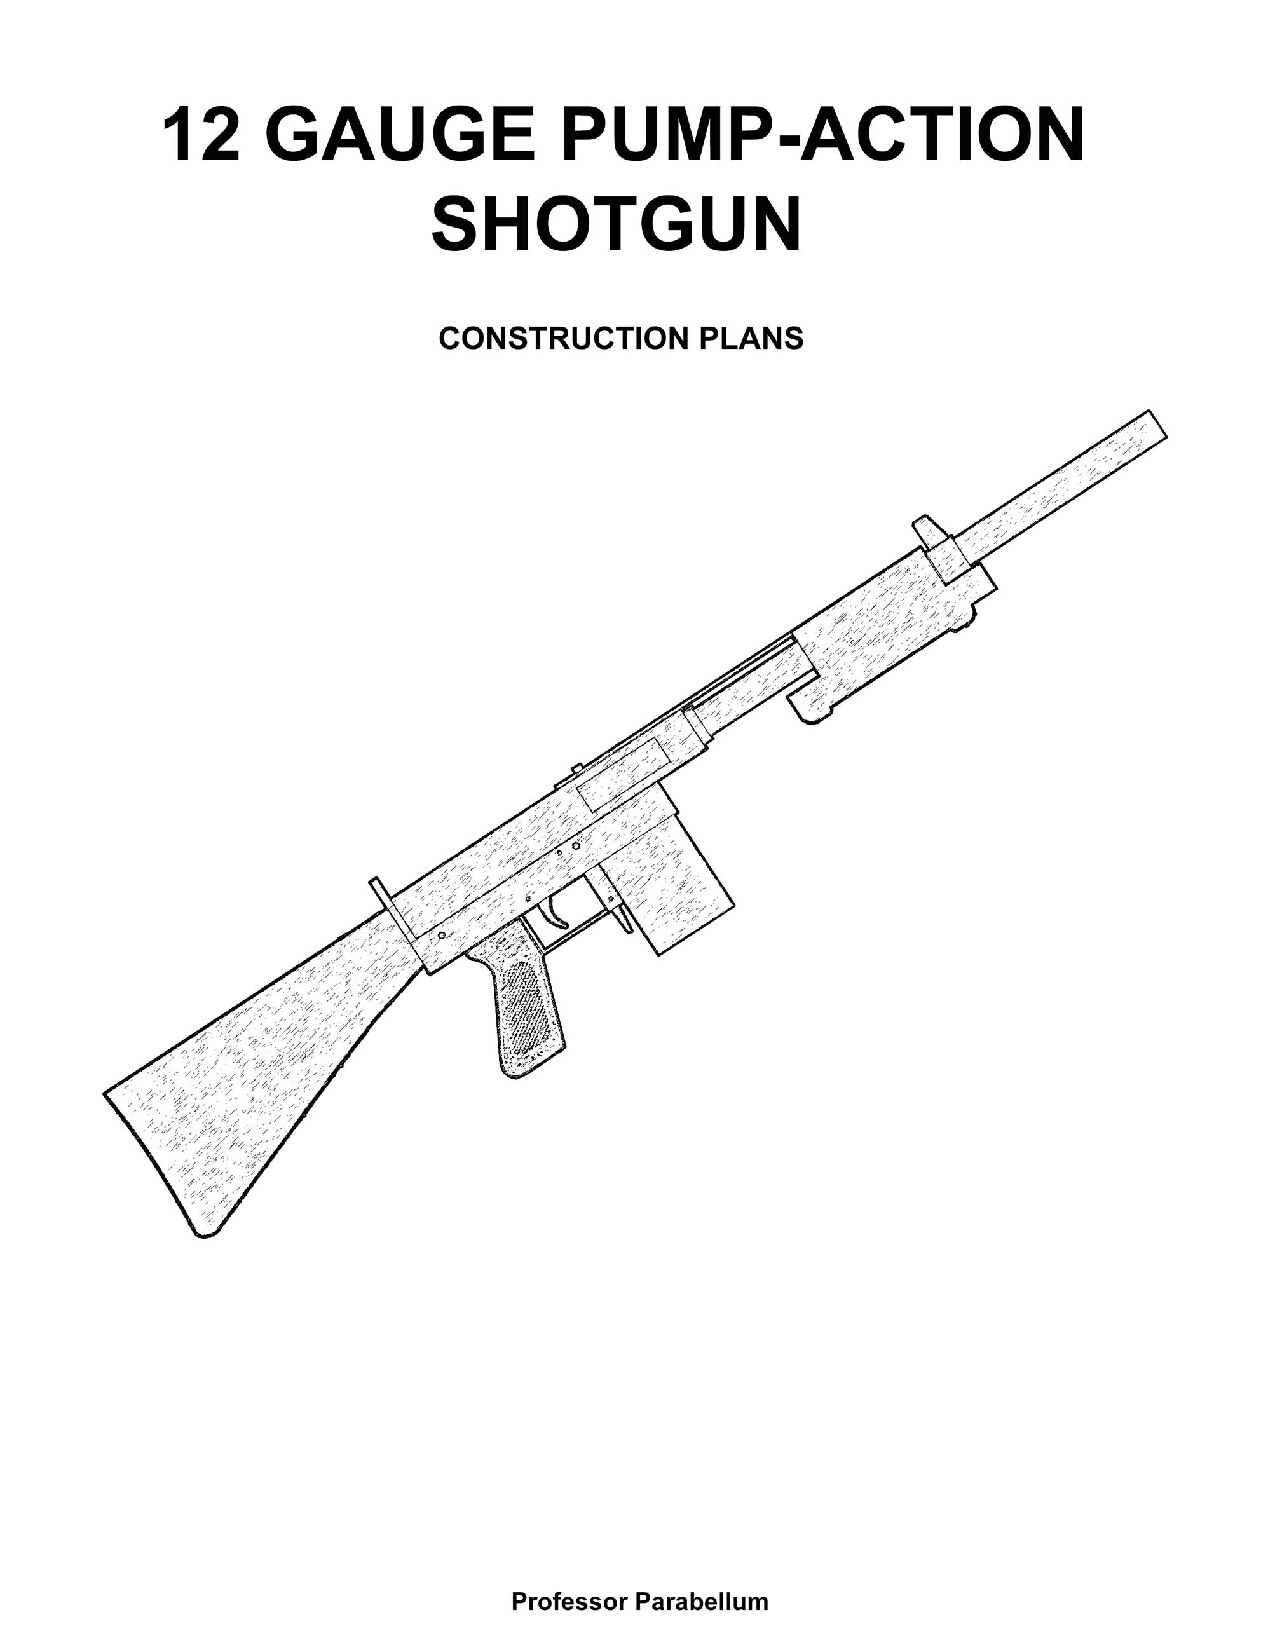 12 Gauge Pump-Action Shotgun